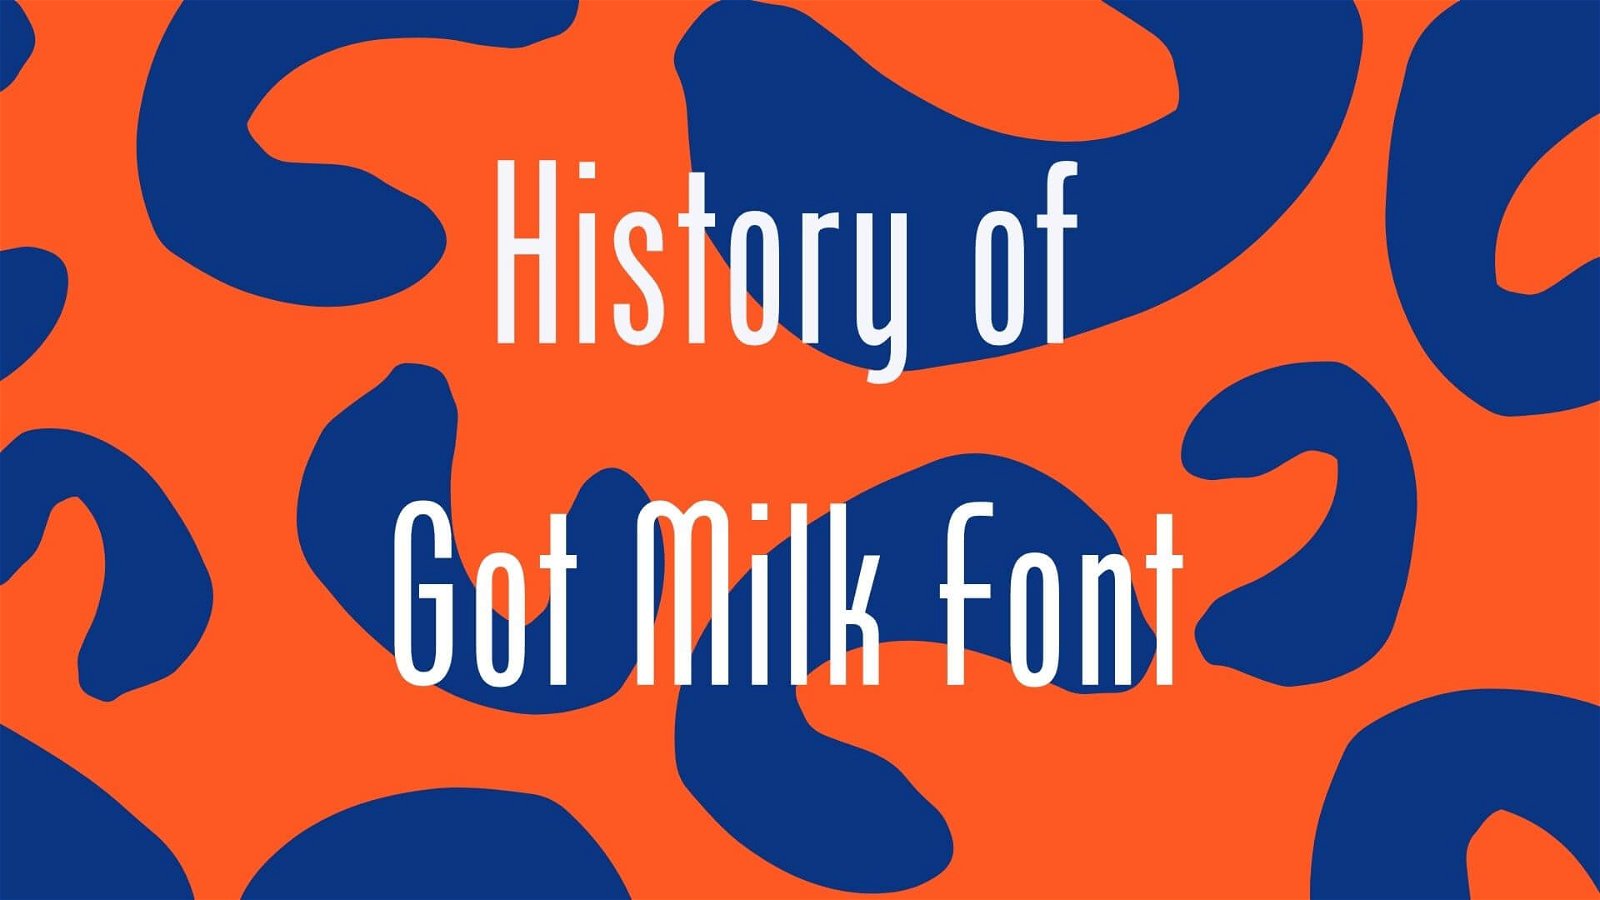 Got milk font free download